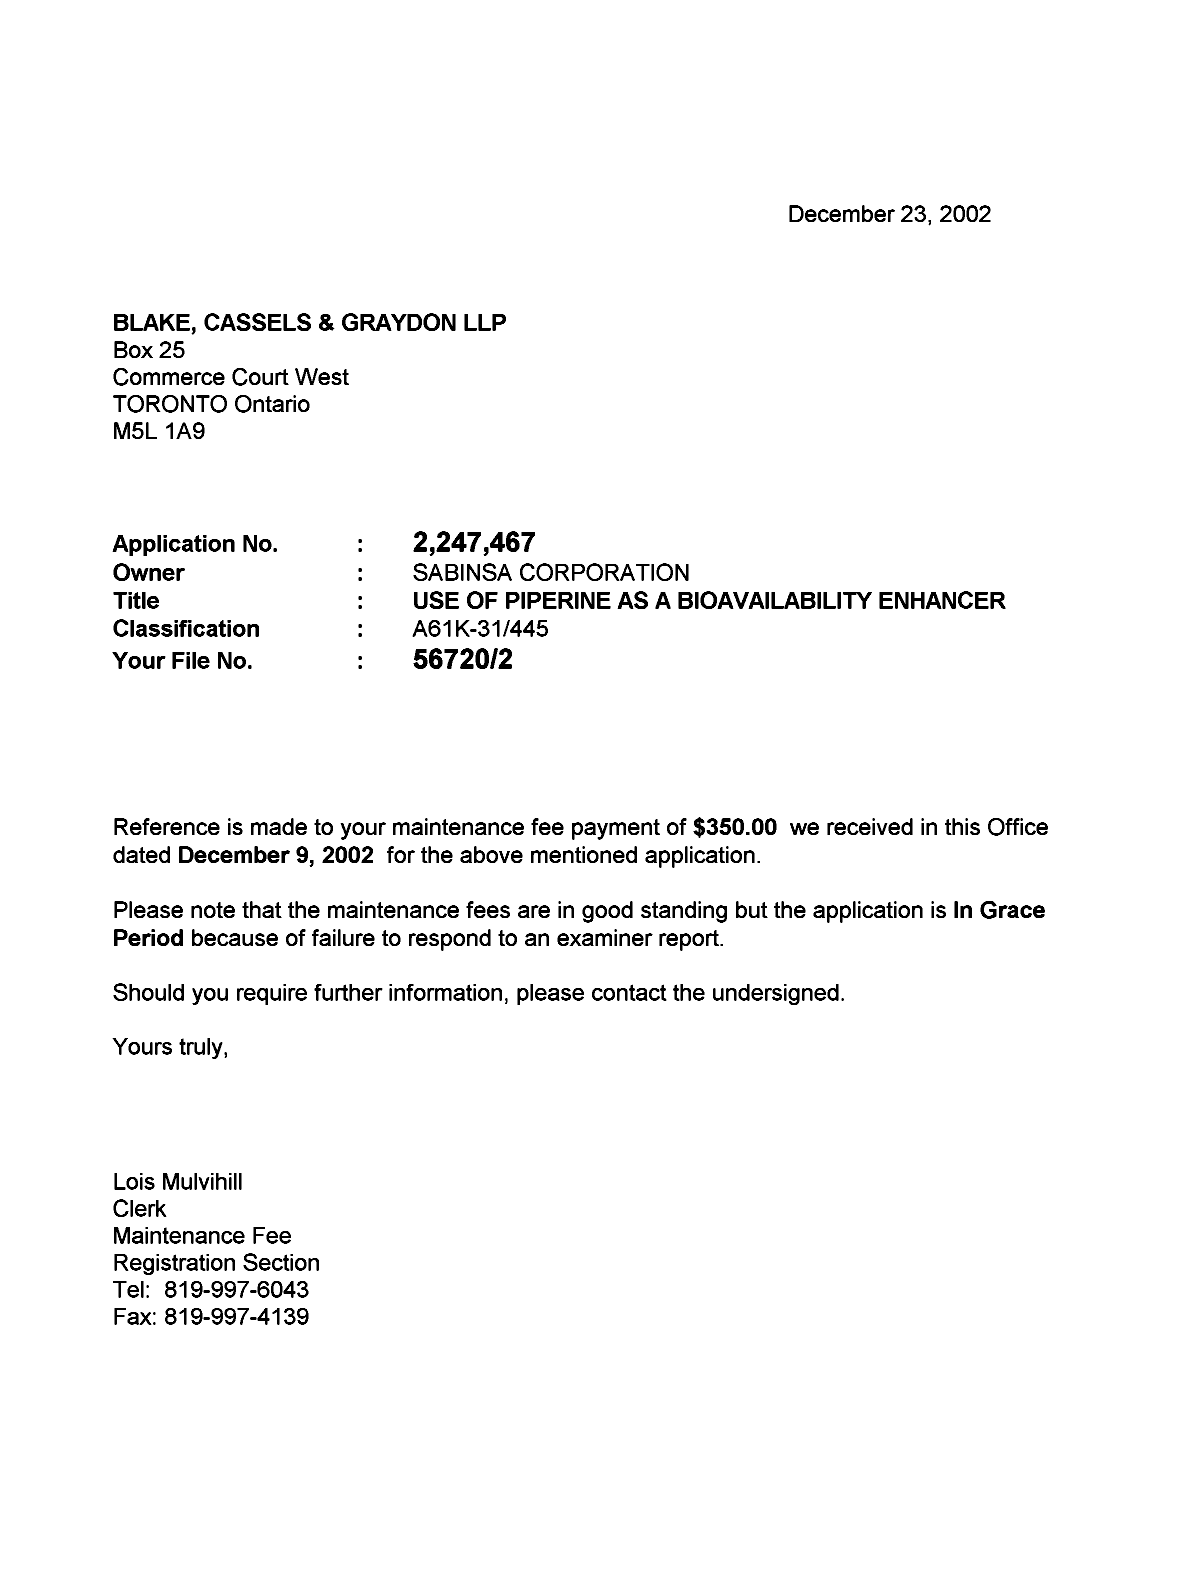 Canadian Patent Document 2247467. Correspondence 20021223. Image 1 of 1